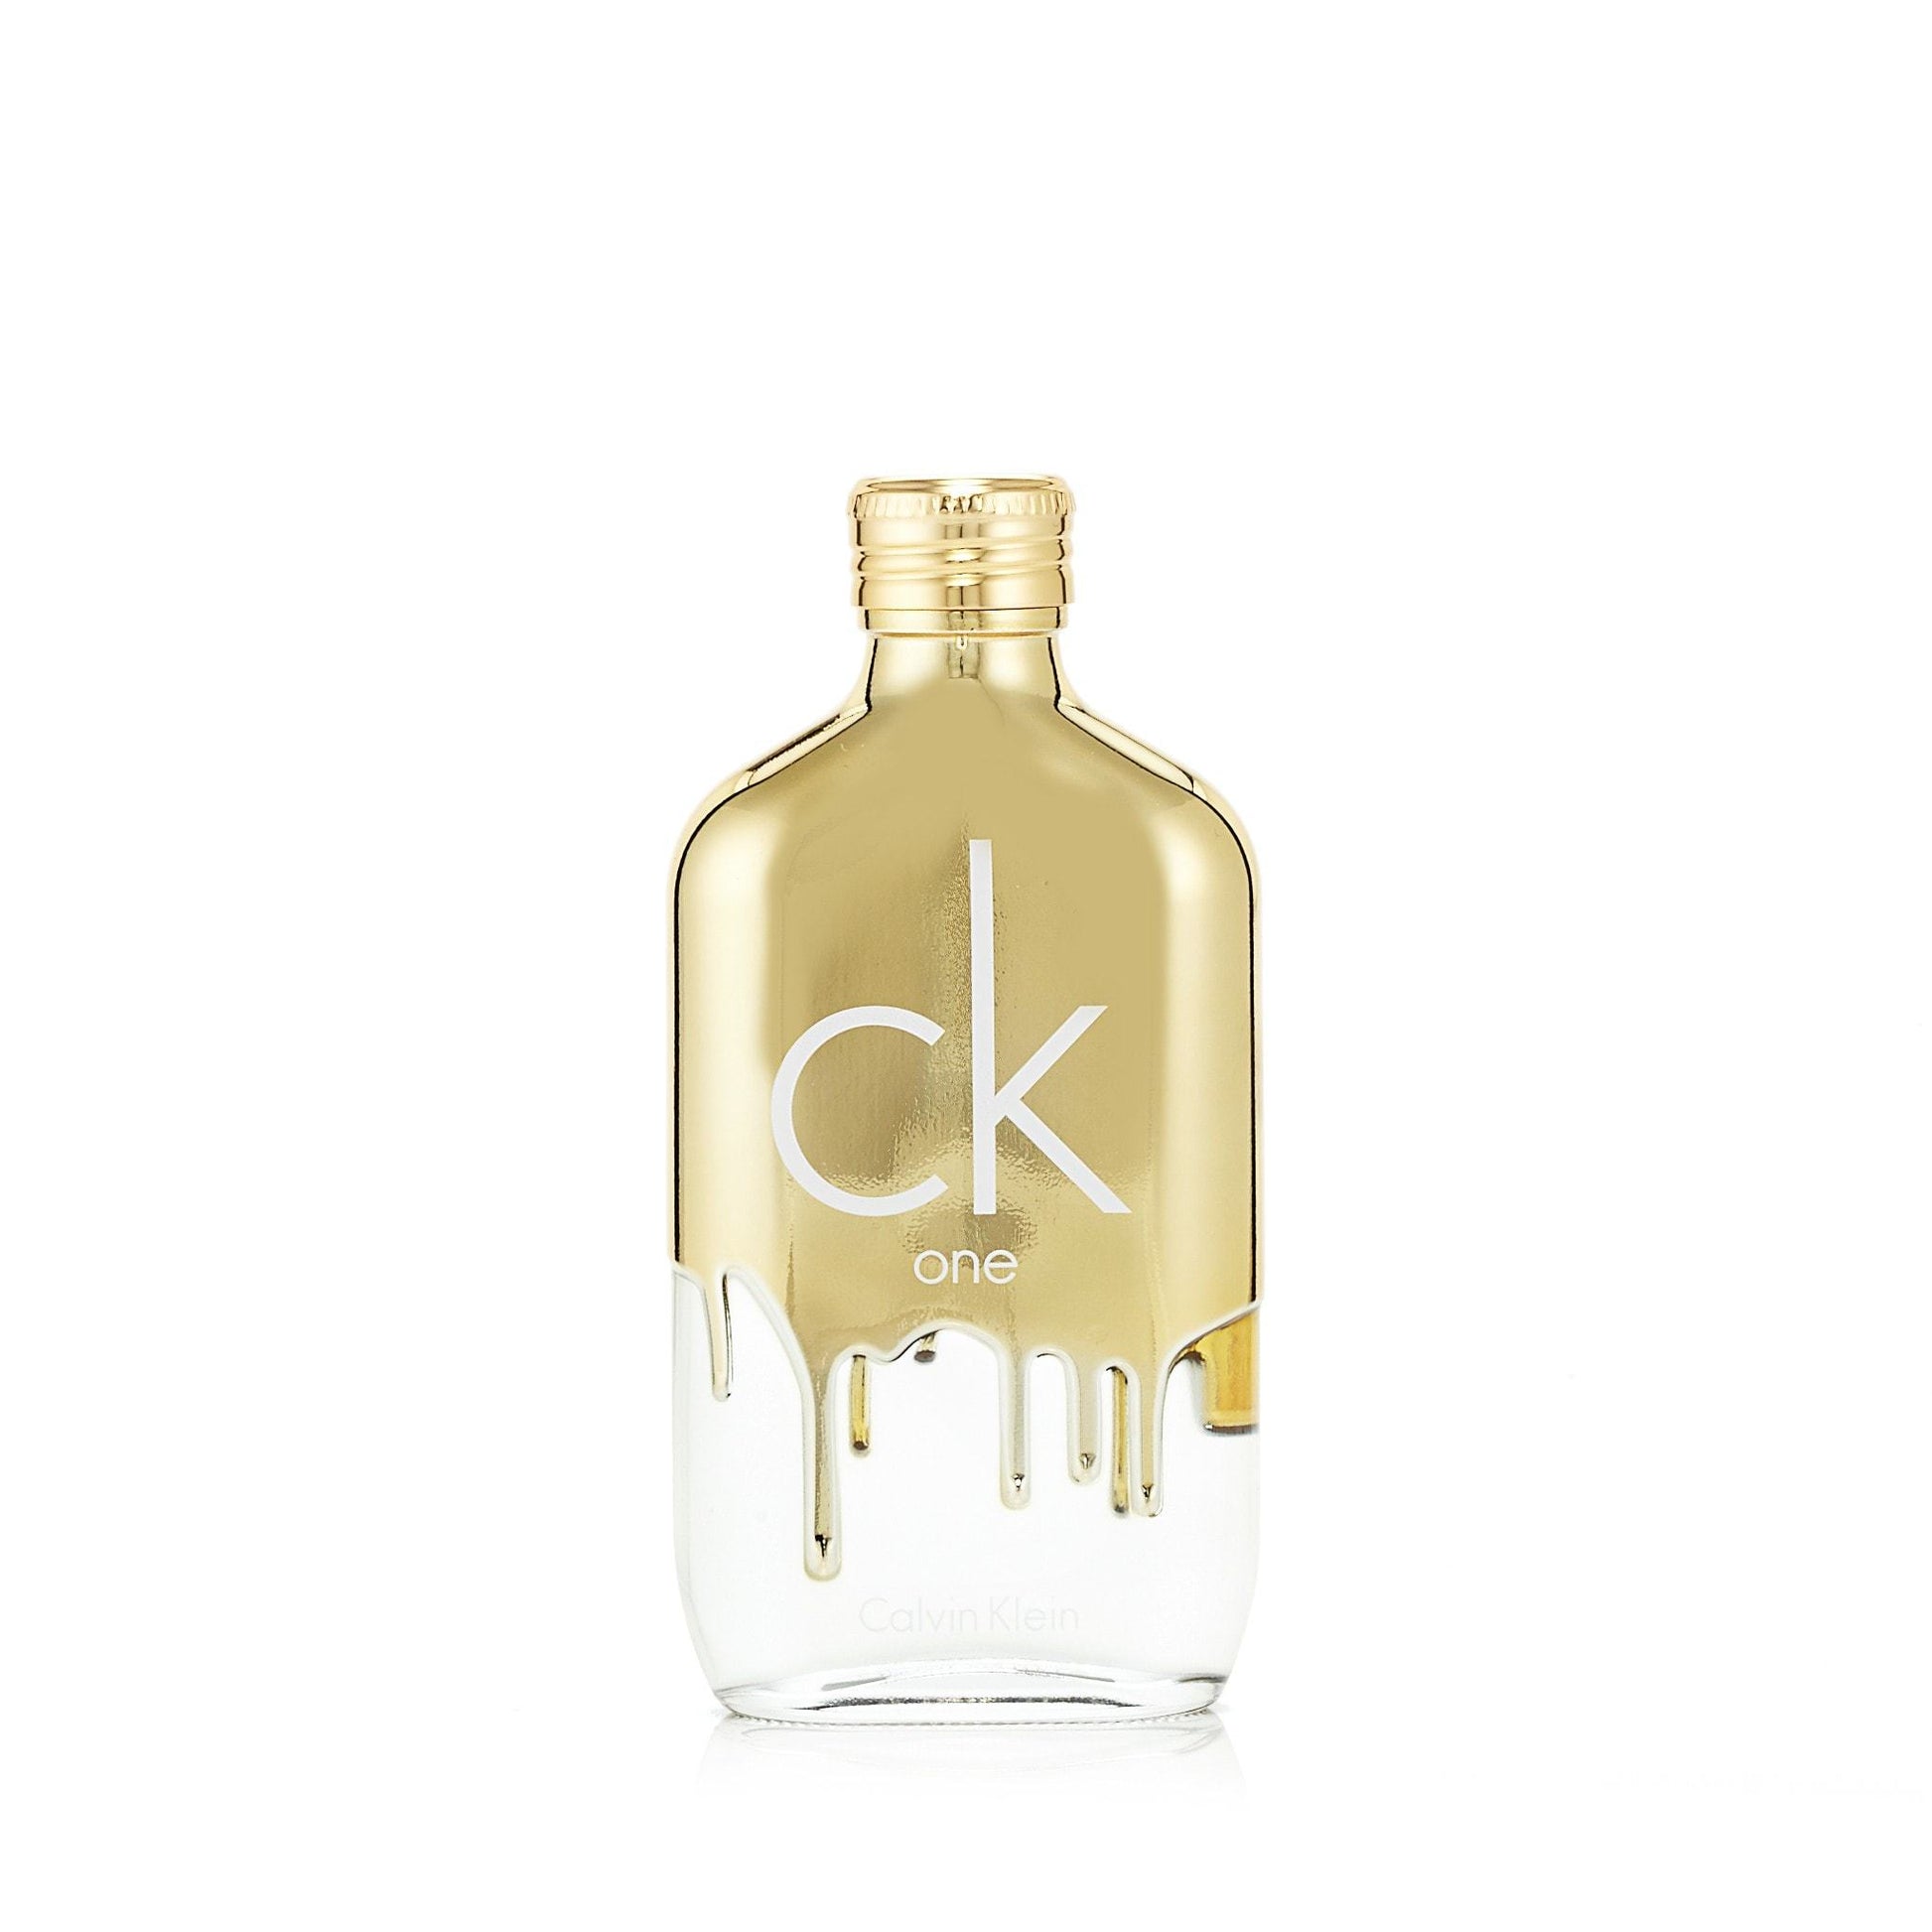 CK One Gold Eau de Toilette Spray for Women and Men by Calvin Klein, Product image 3